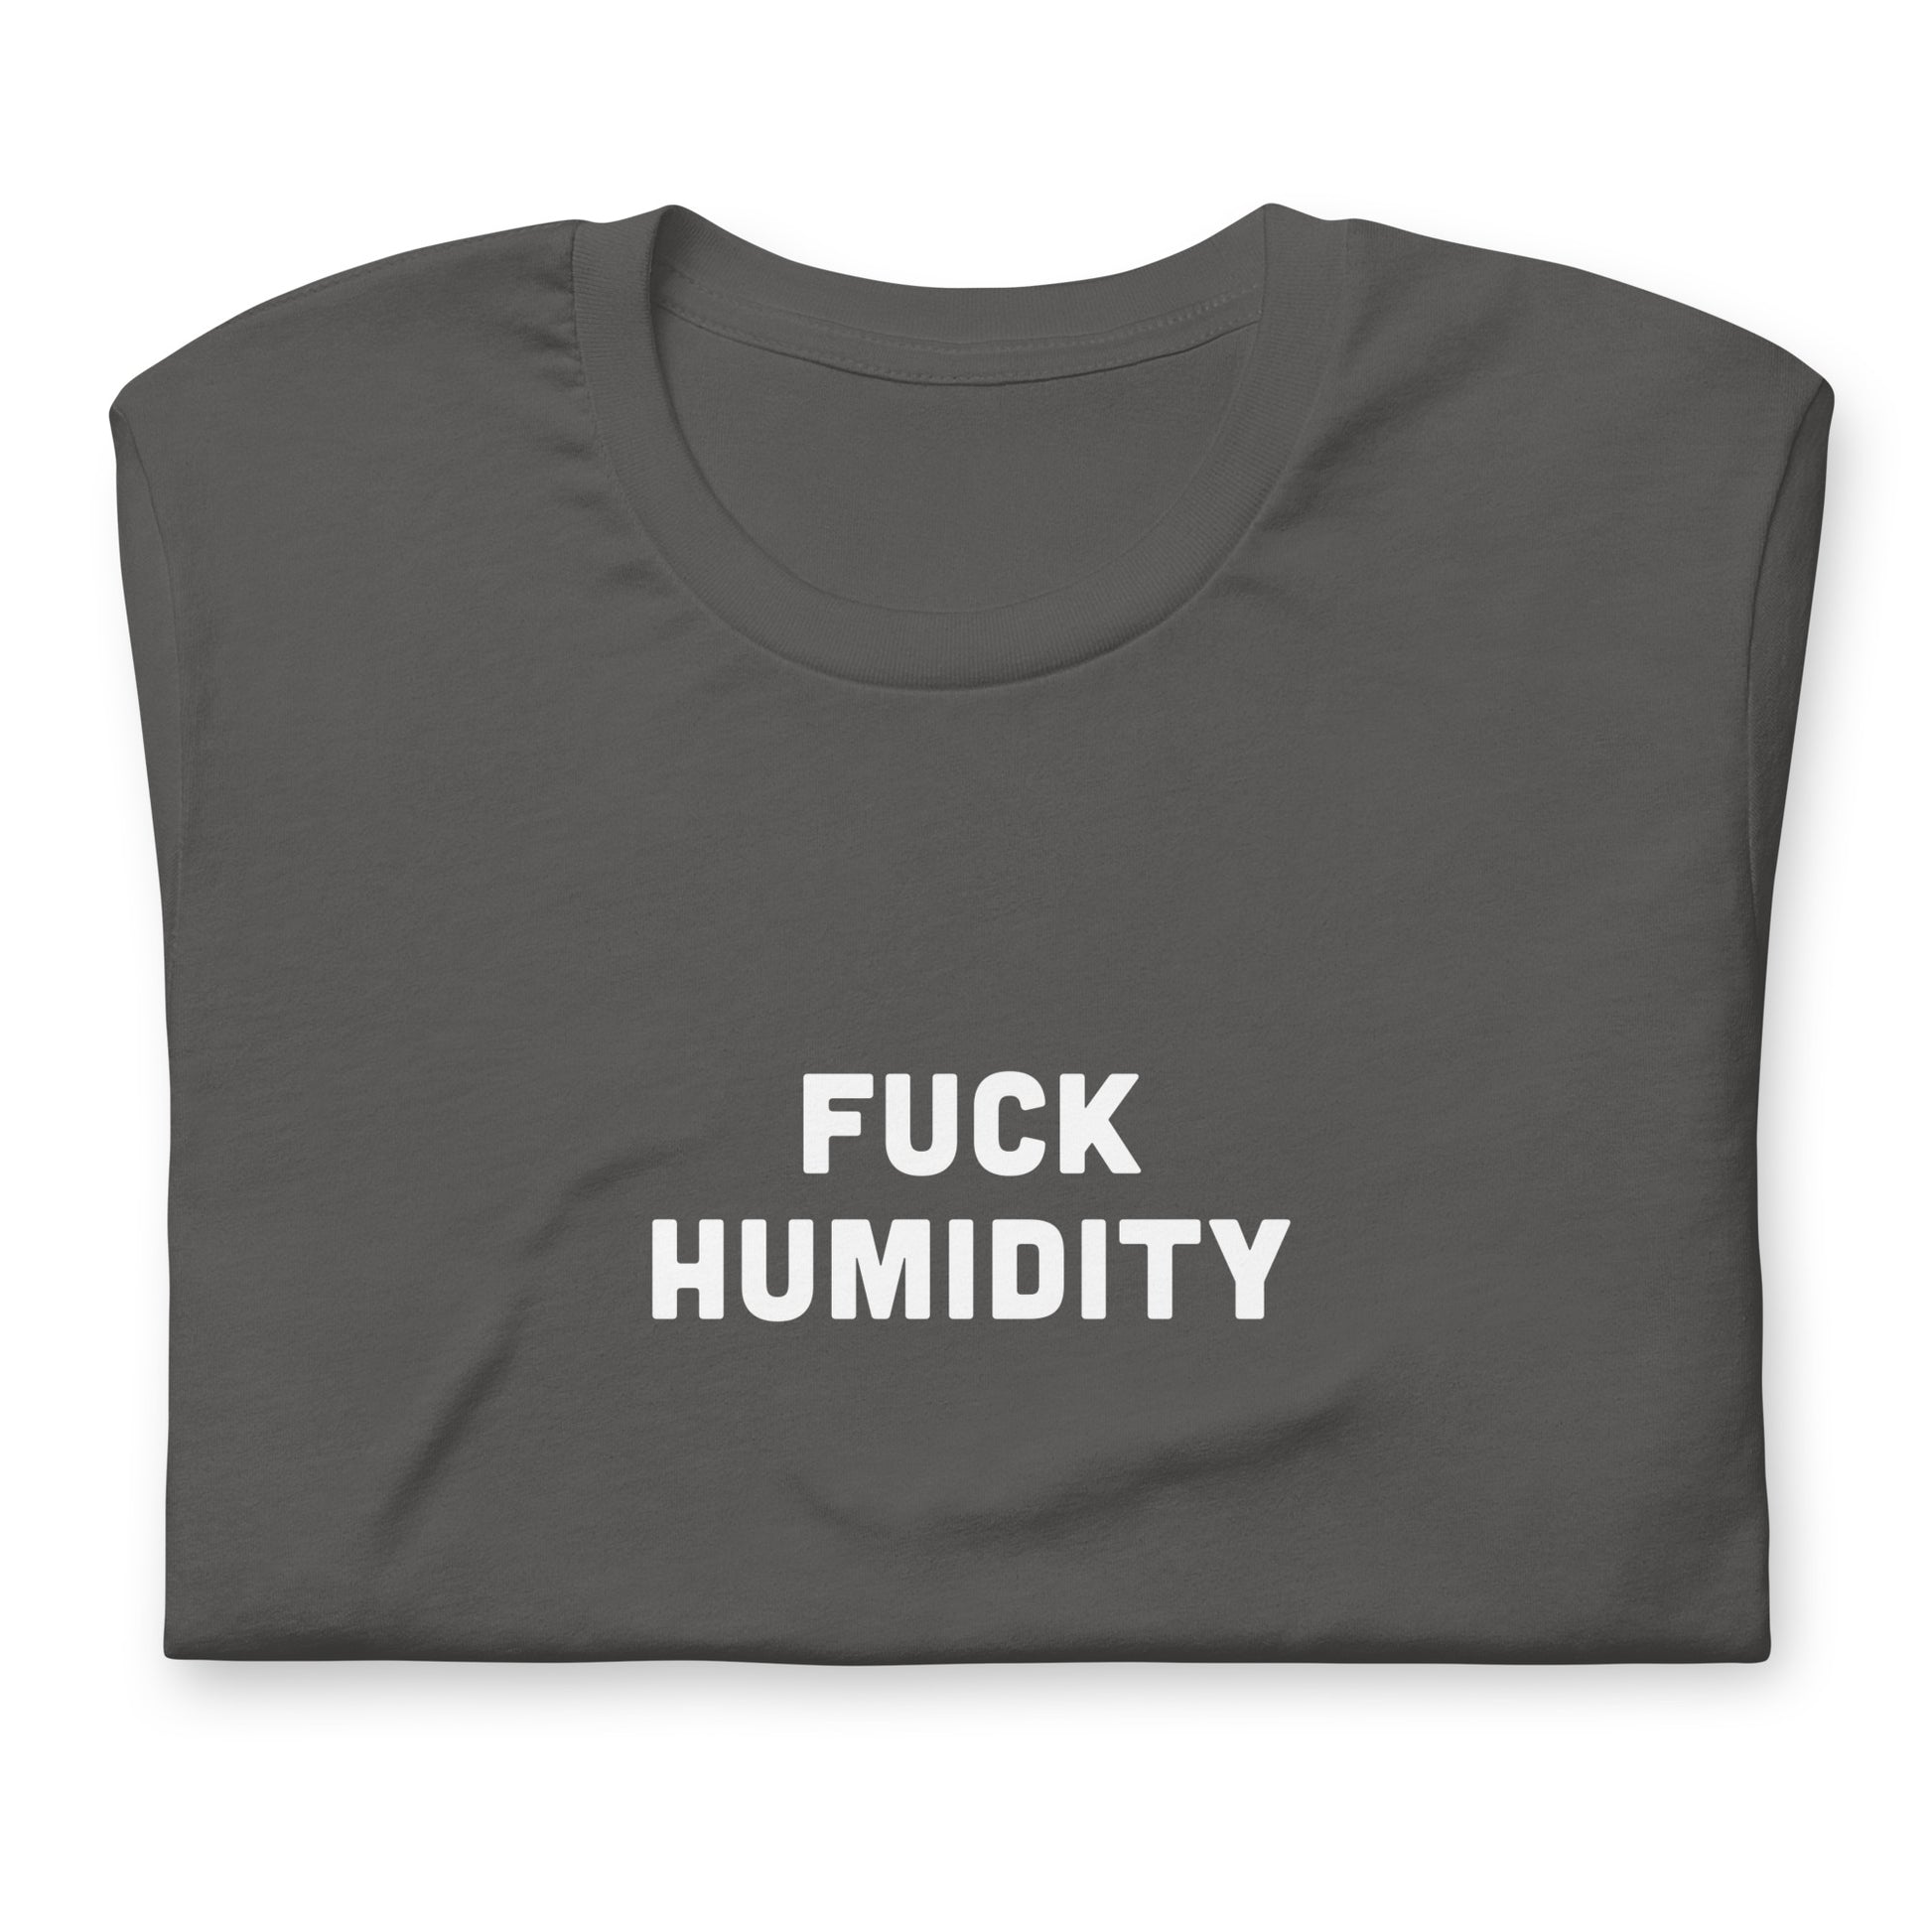 Fuck Humidity T-Shirt Size 2XL Color Black